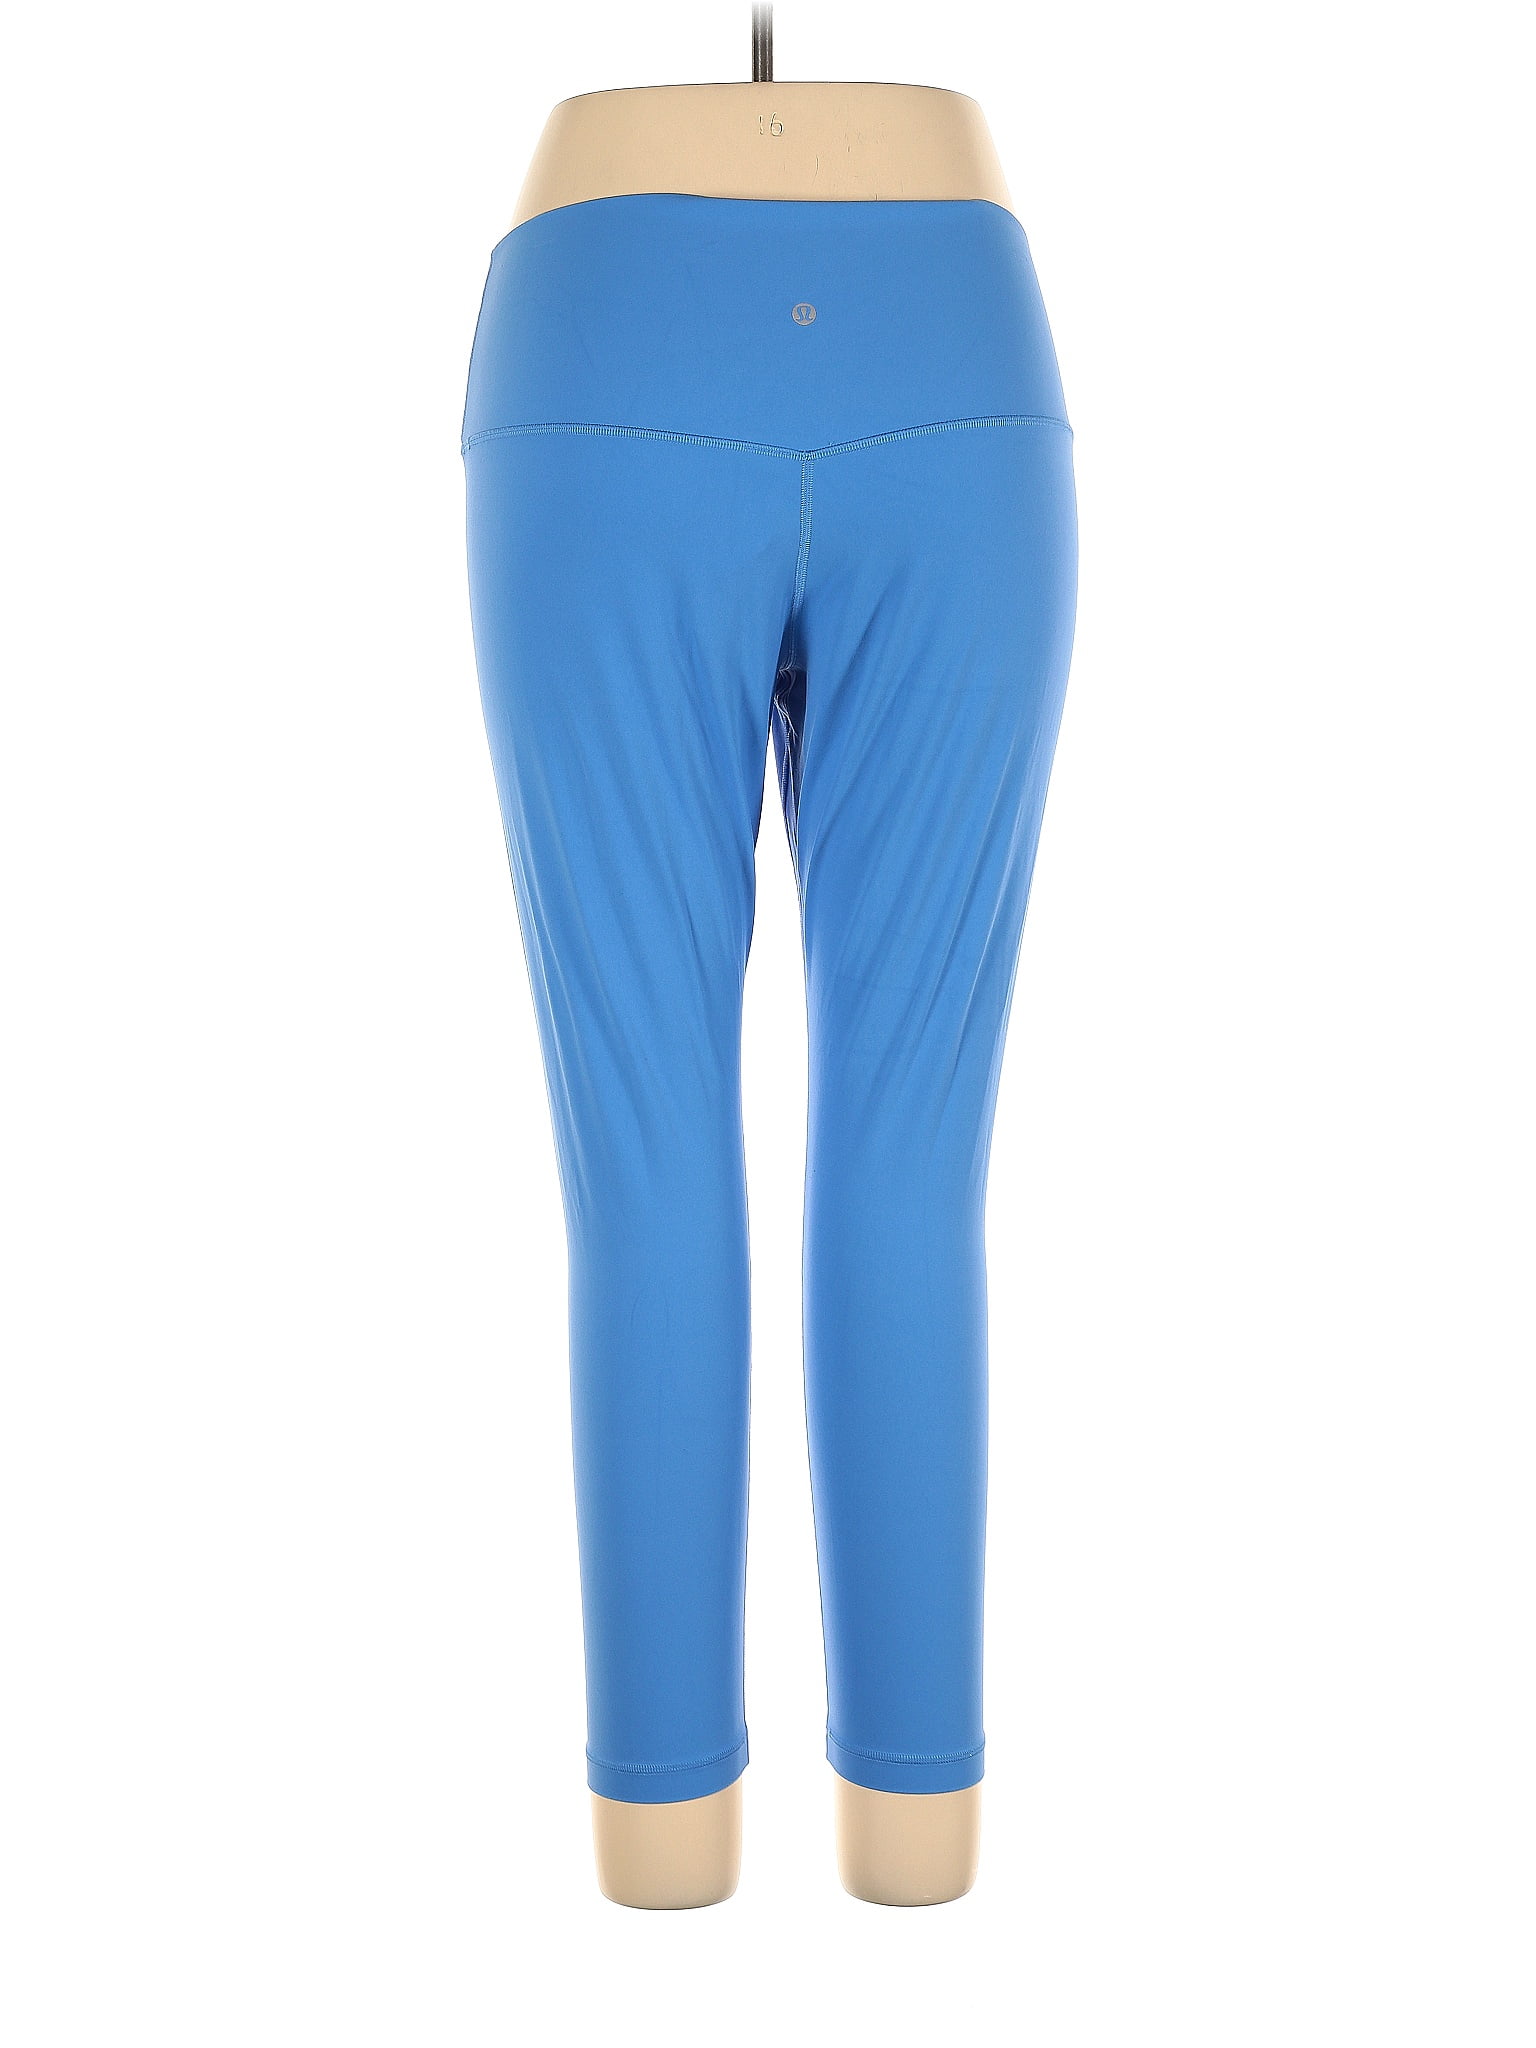 Lululemon Athletica Blue Active Pants Size 8 - 55% off